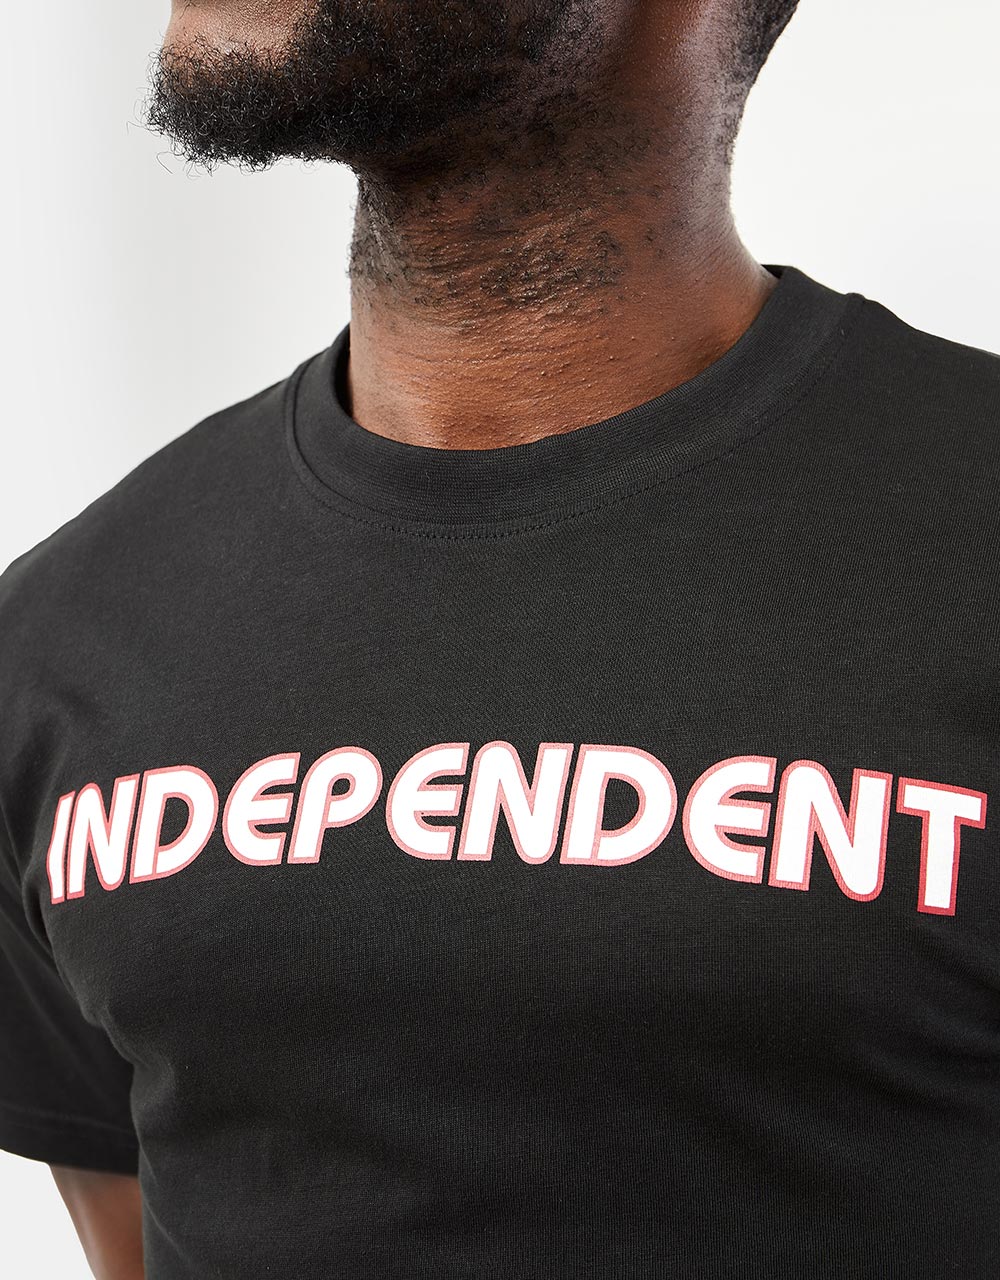 Independent BTG Bauhaus T-Shirt - Black